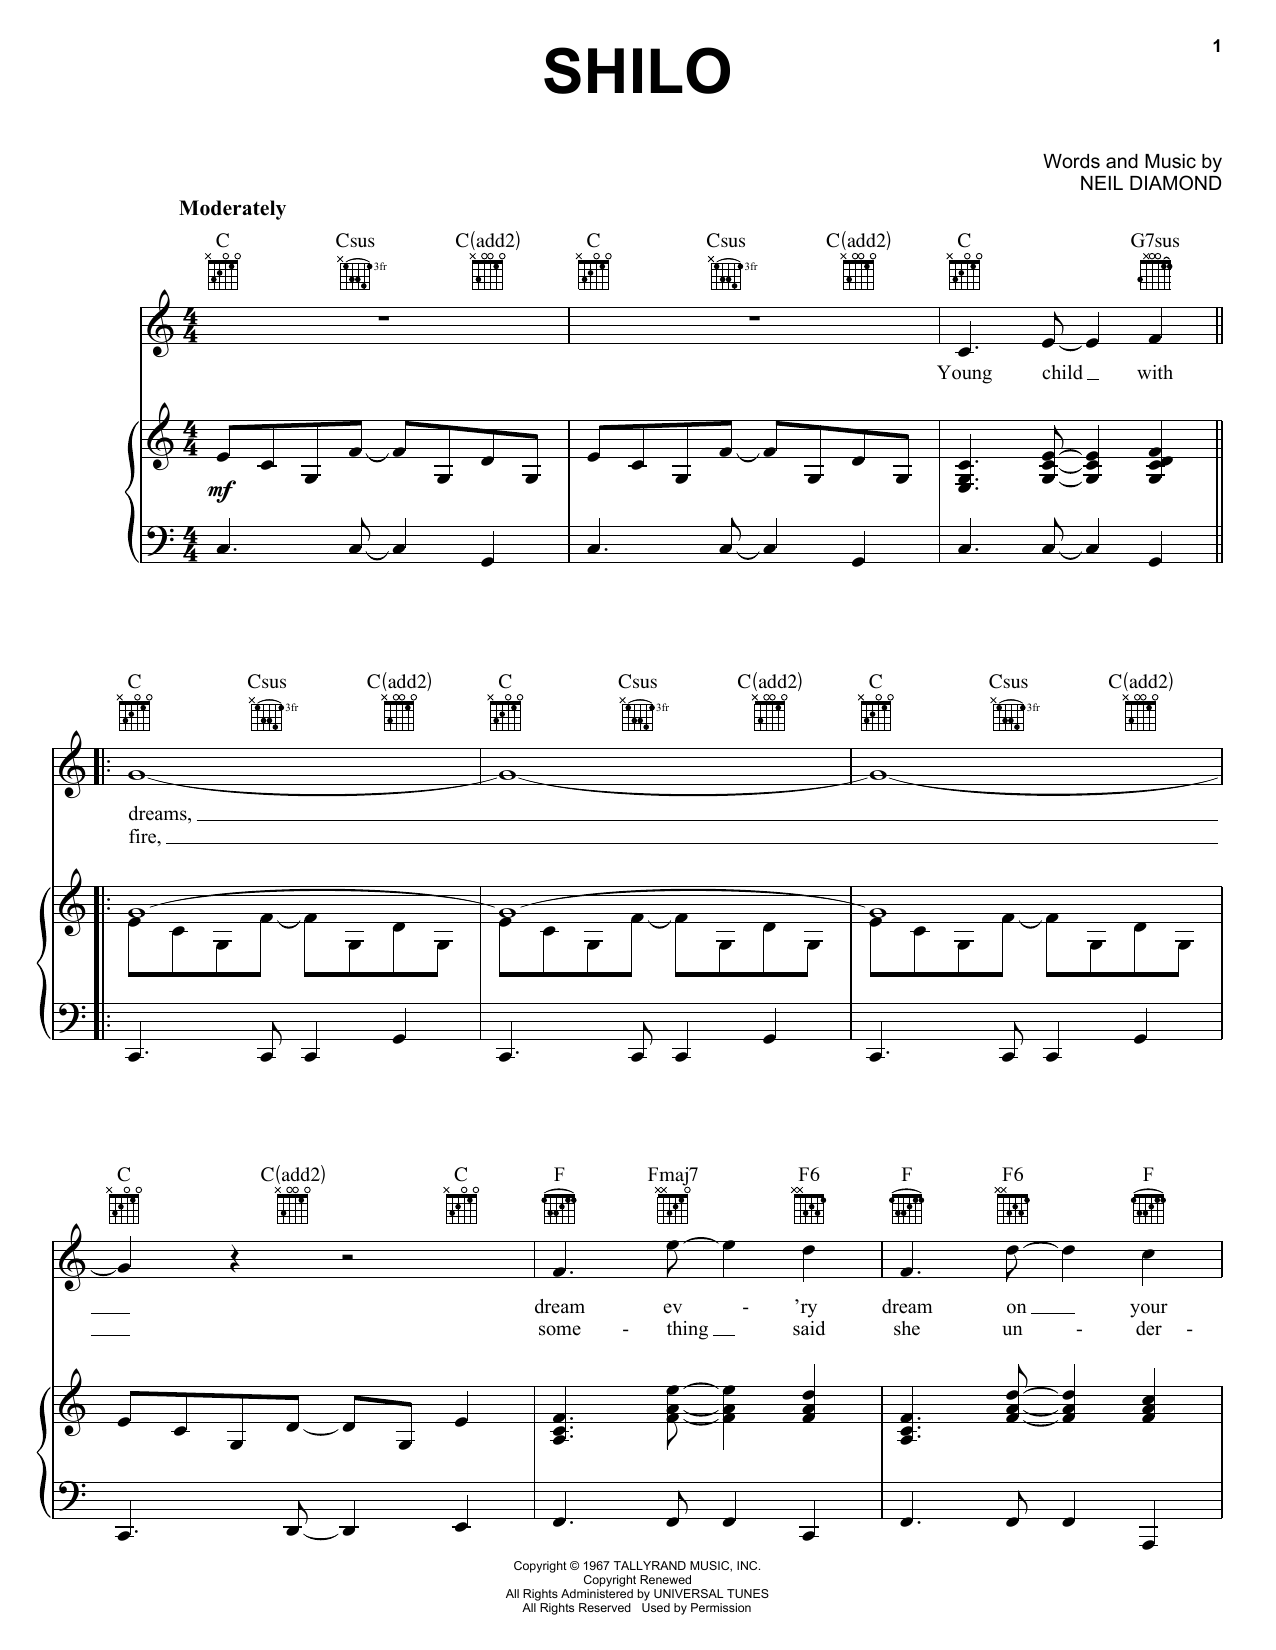 Neil Diamond Shilo Sheet Music Notes & Chords for Lyrics & Chords - Download or Print PDF